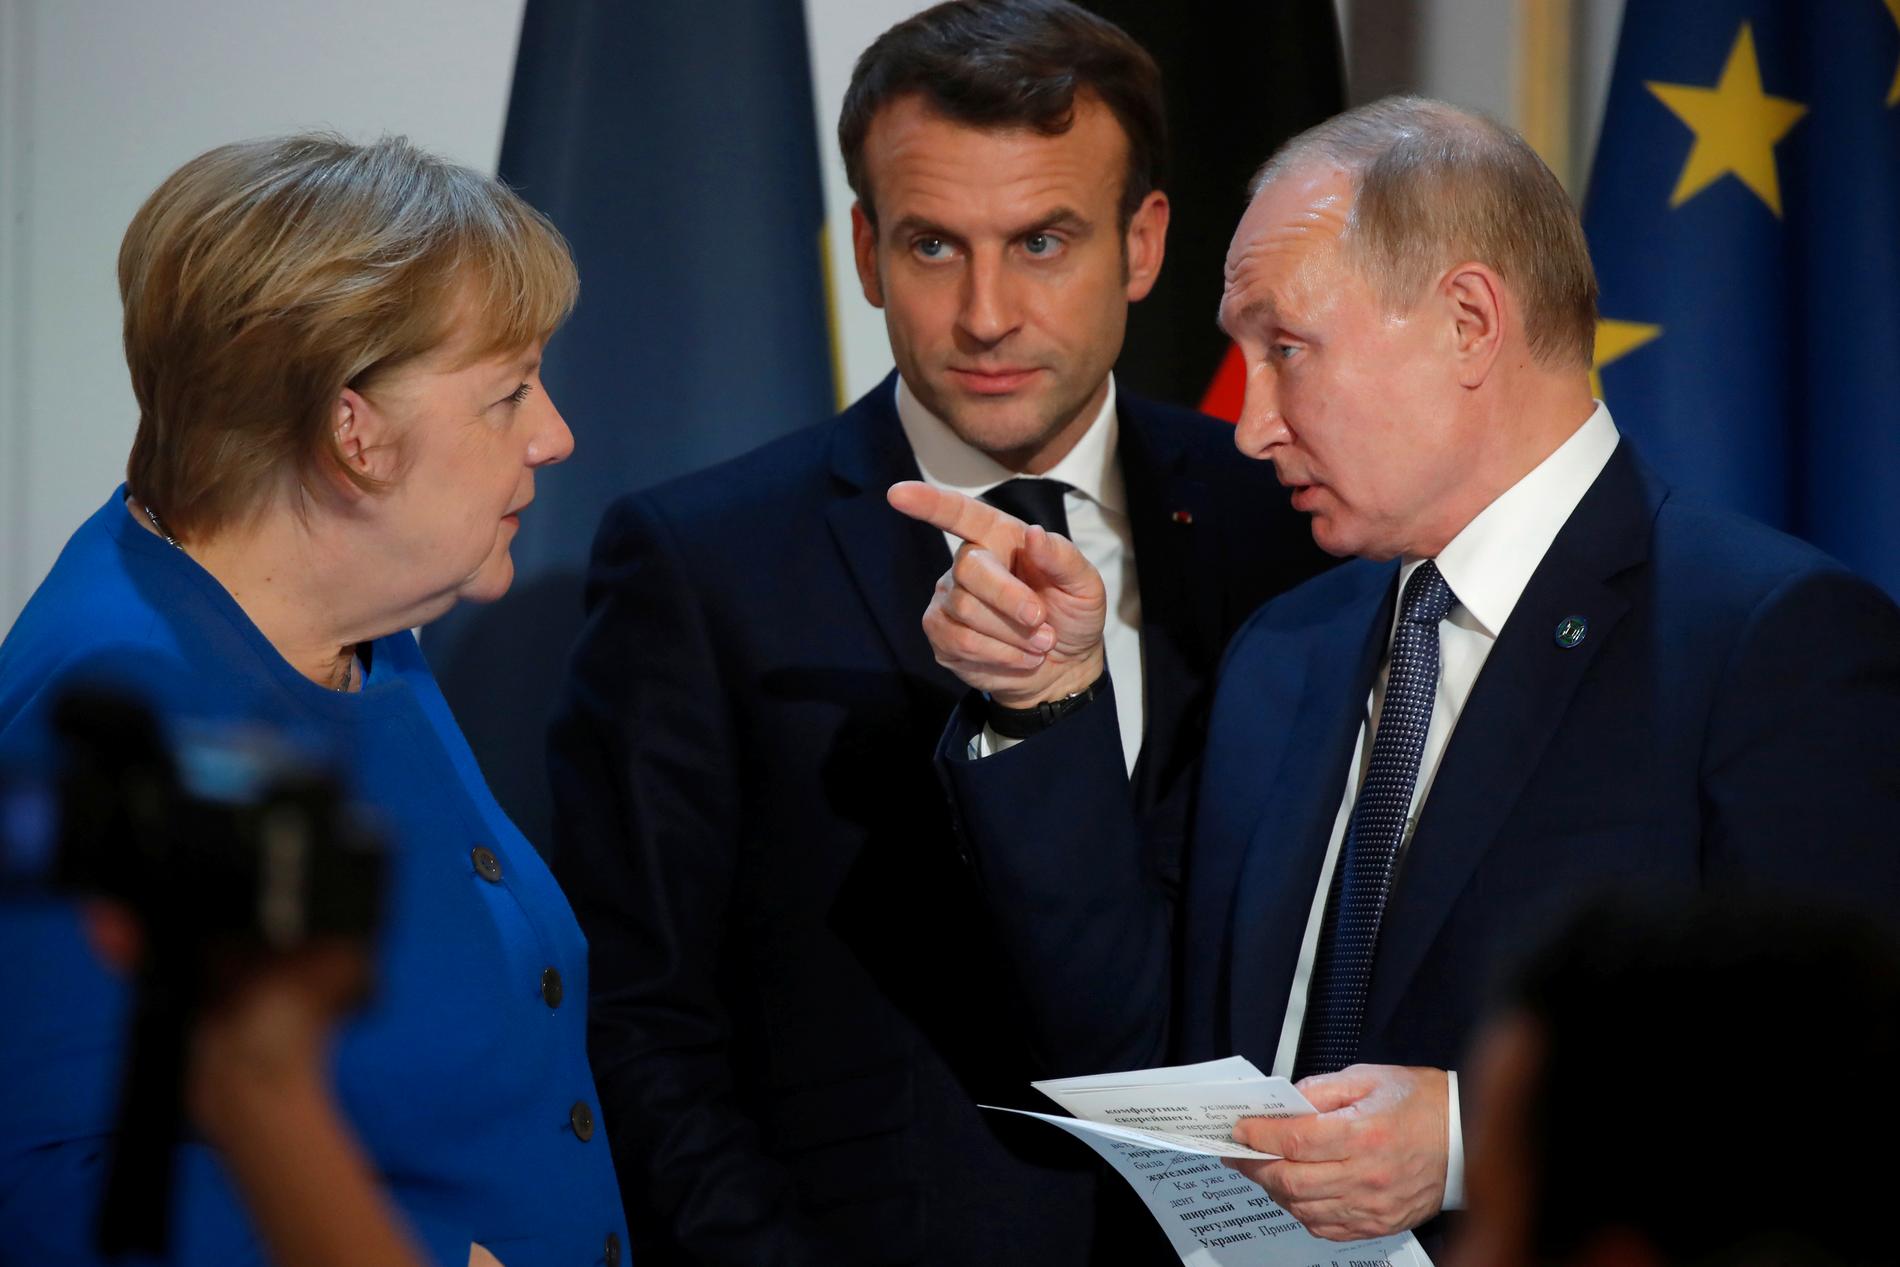 Tysklands förbundskansler Angela Merkel i samspråk med Rysslands president Vladimir Putin under en presskonferens i Paris i måndags. I bakgrunden den franske presidenten Emmanuel Macron. Arkivbild.